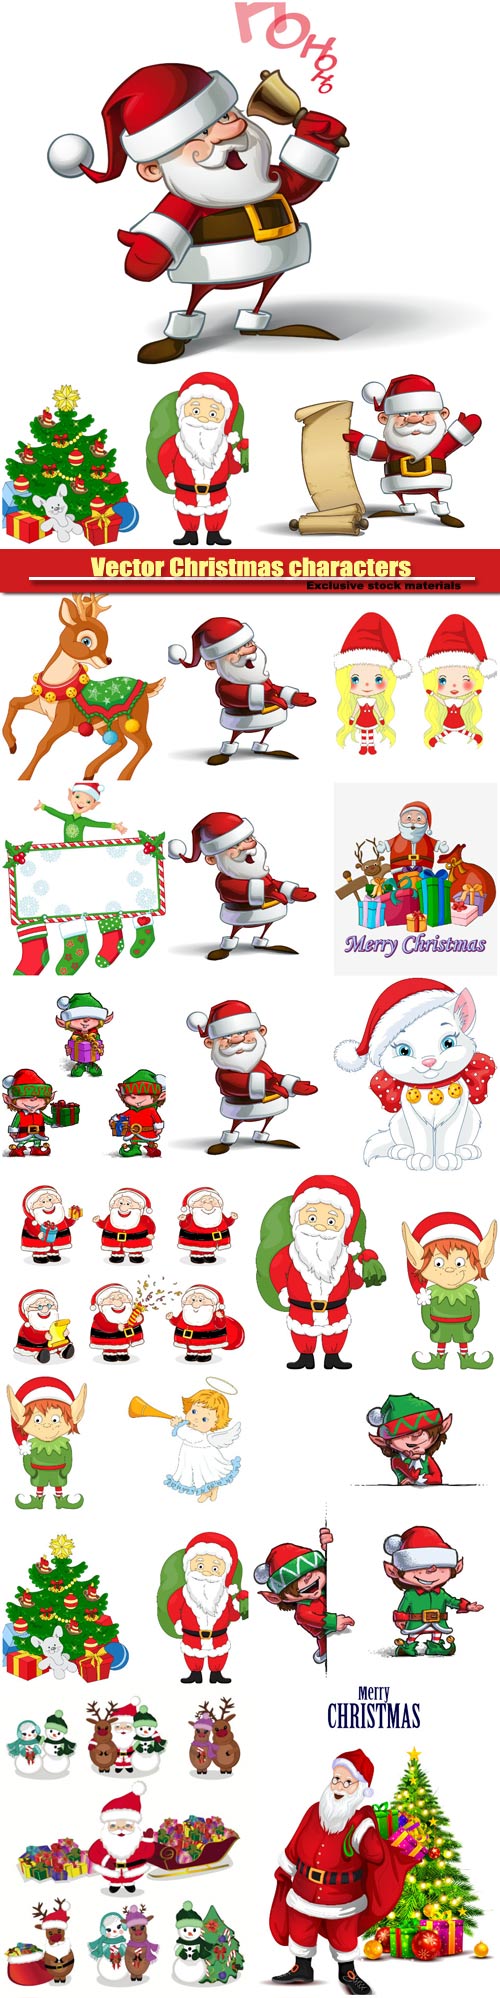 Vector Christmas characters, Santa Claus, elves and snowmen